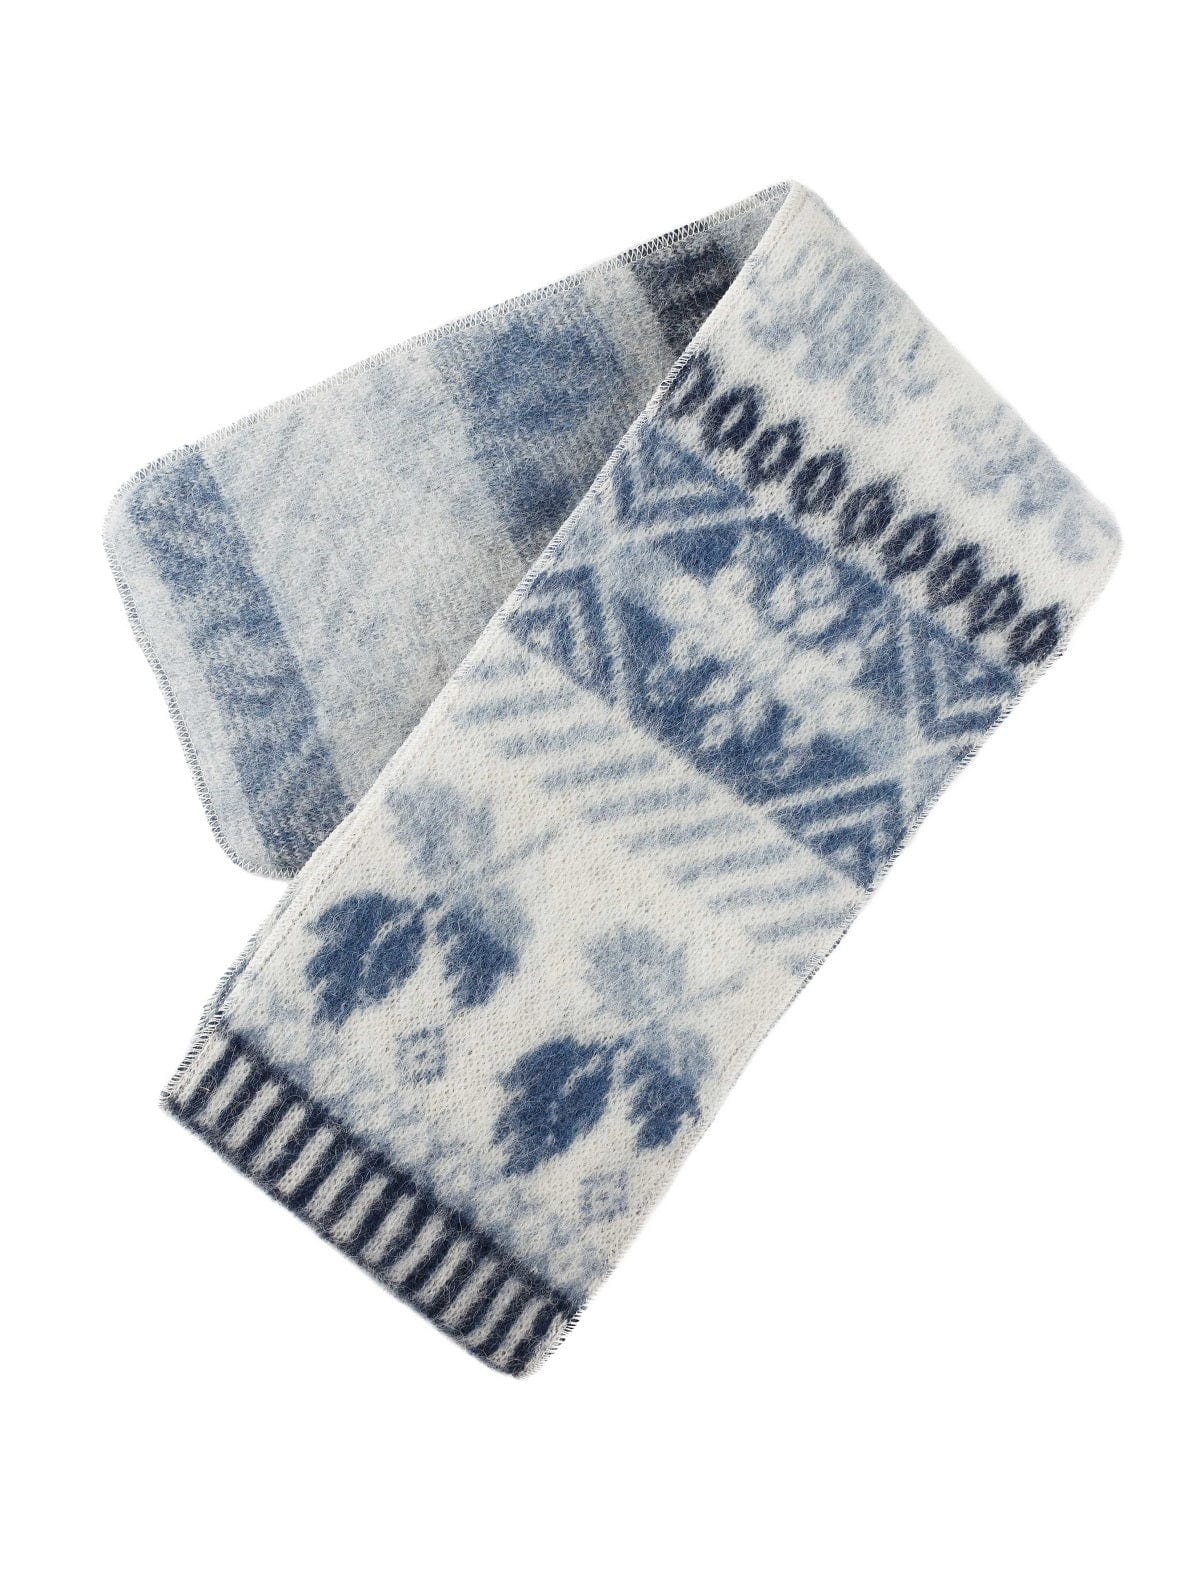 Brushed wool scarf 8-petalled rose pattern - White / Blue - The Icelandic Store